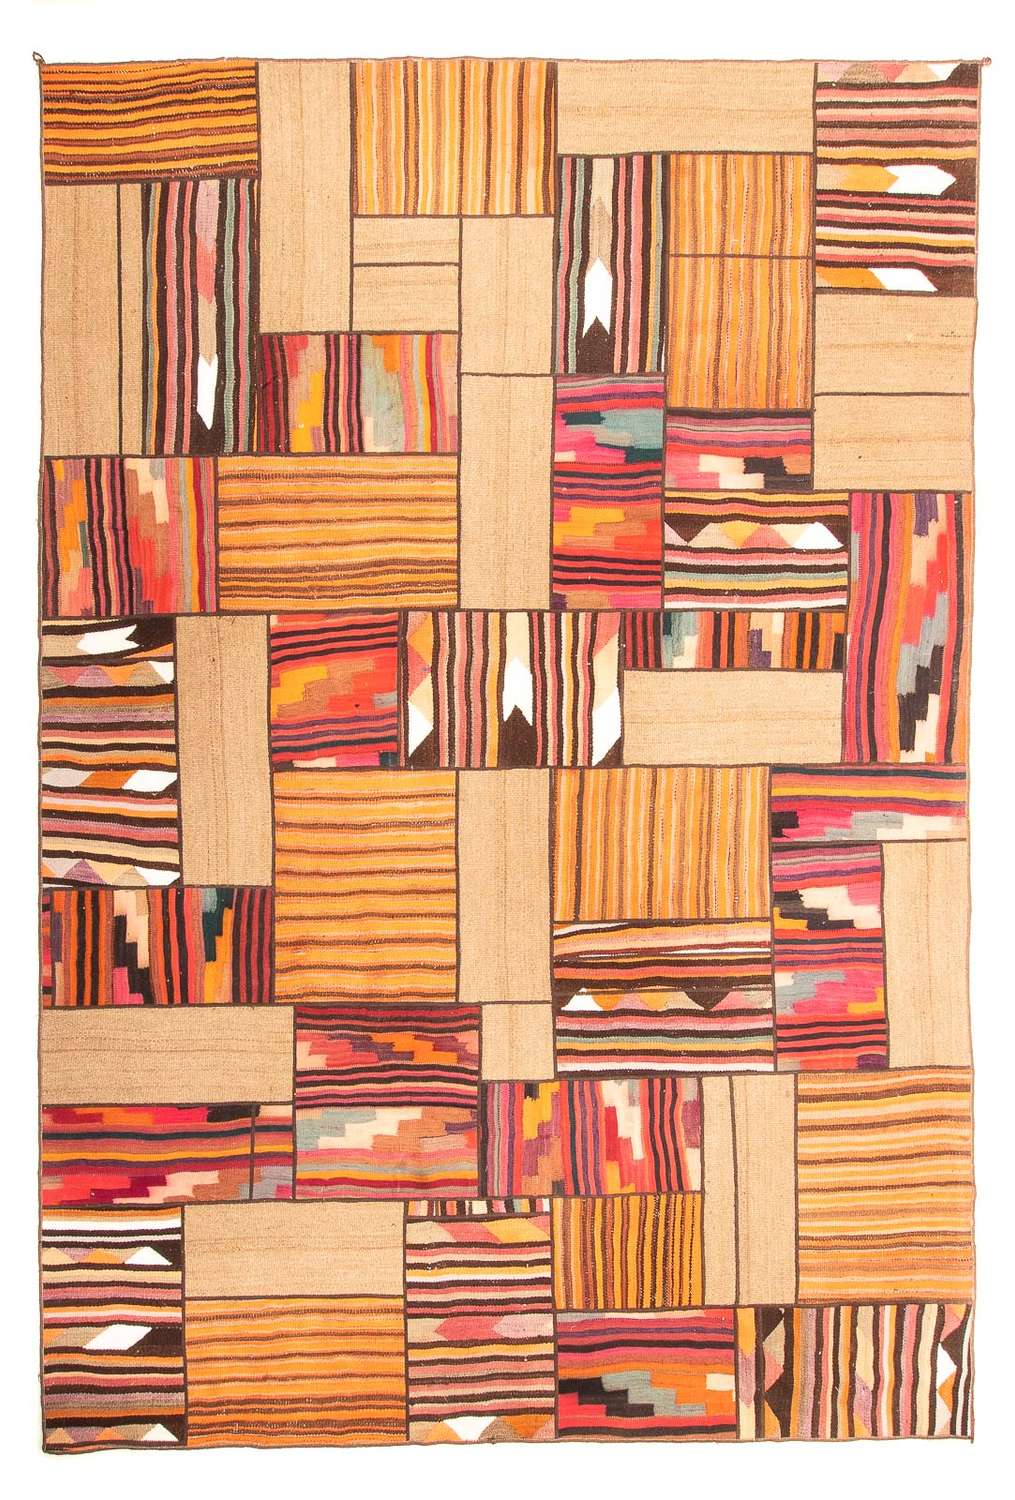 Alfombra de patchwork - 350 x 250 cm - multicolor